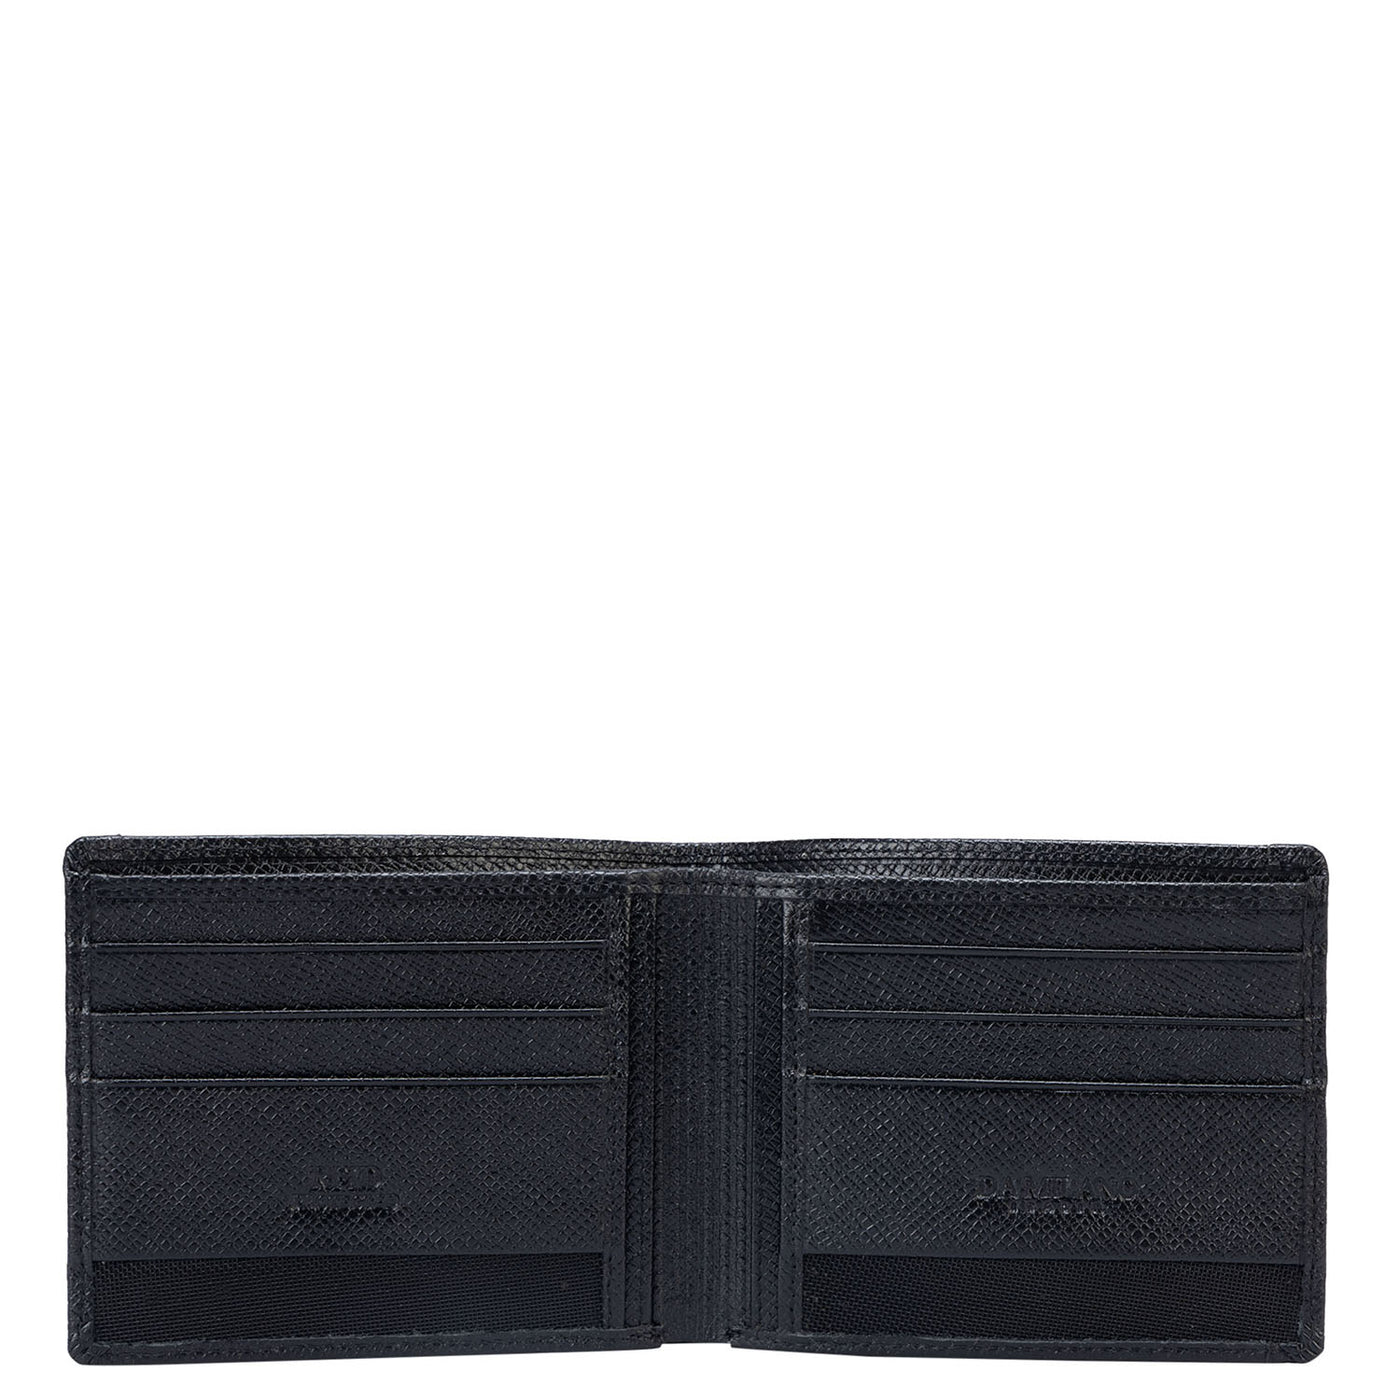 Franzy Croco Leather Mens Wallet - Black